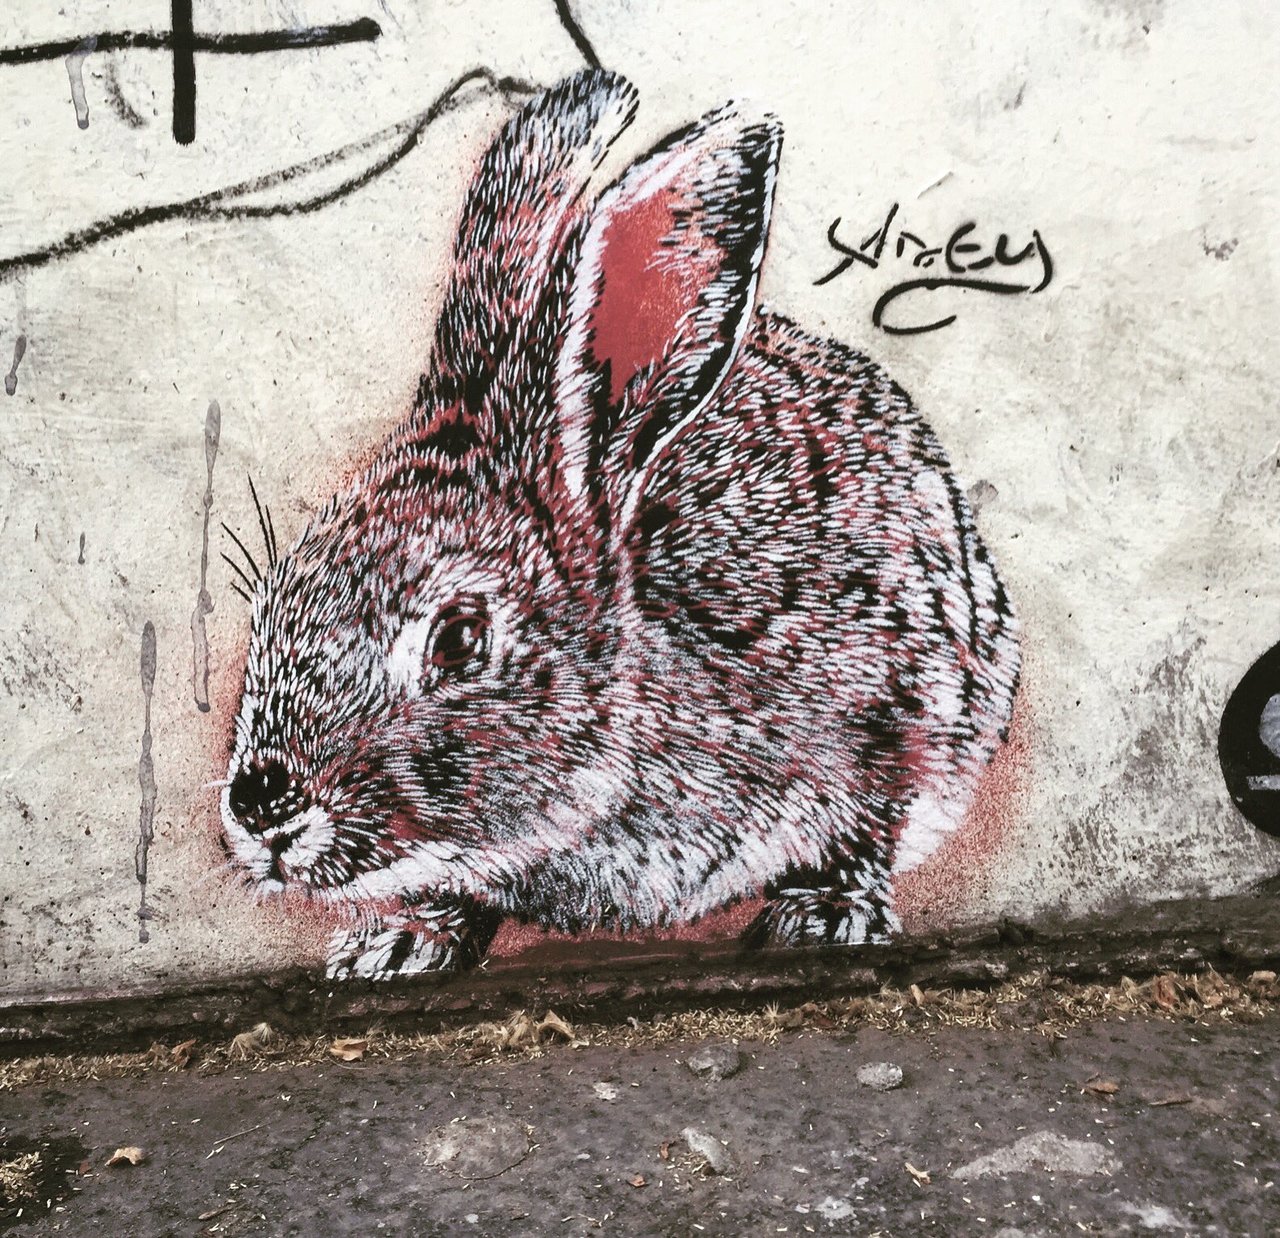 Follow the Rabbit by @AdeyWCA #adey  #pochoir #stencil #rabbit #streetart #graffiti #graff #spray #bombing https://t.co/BeogBcygNv